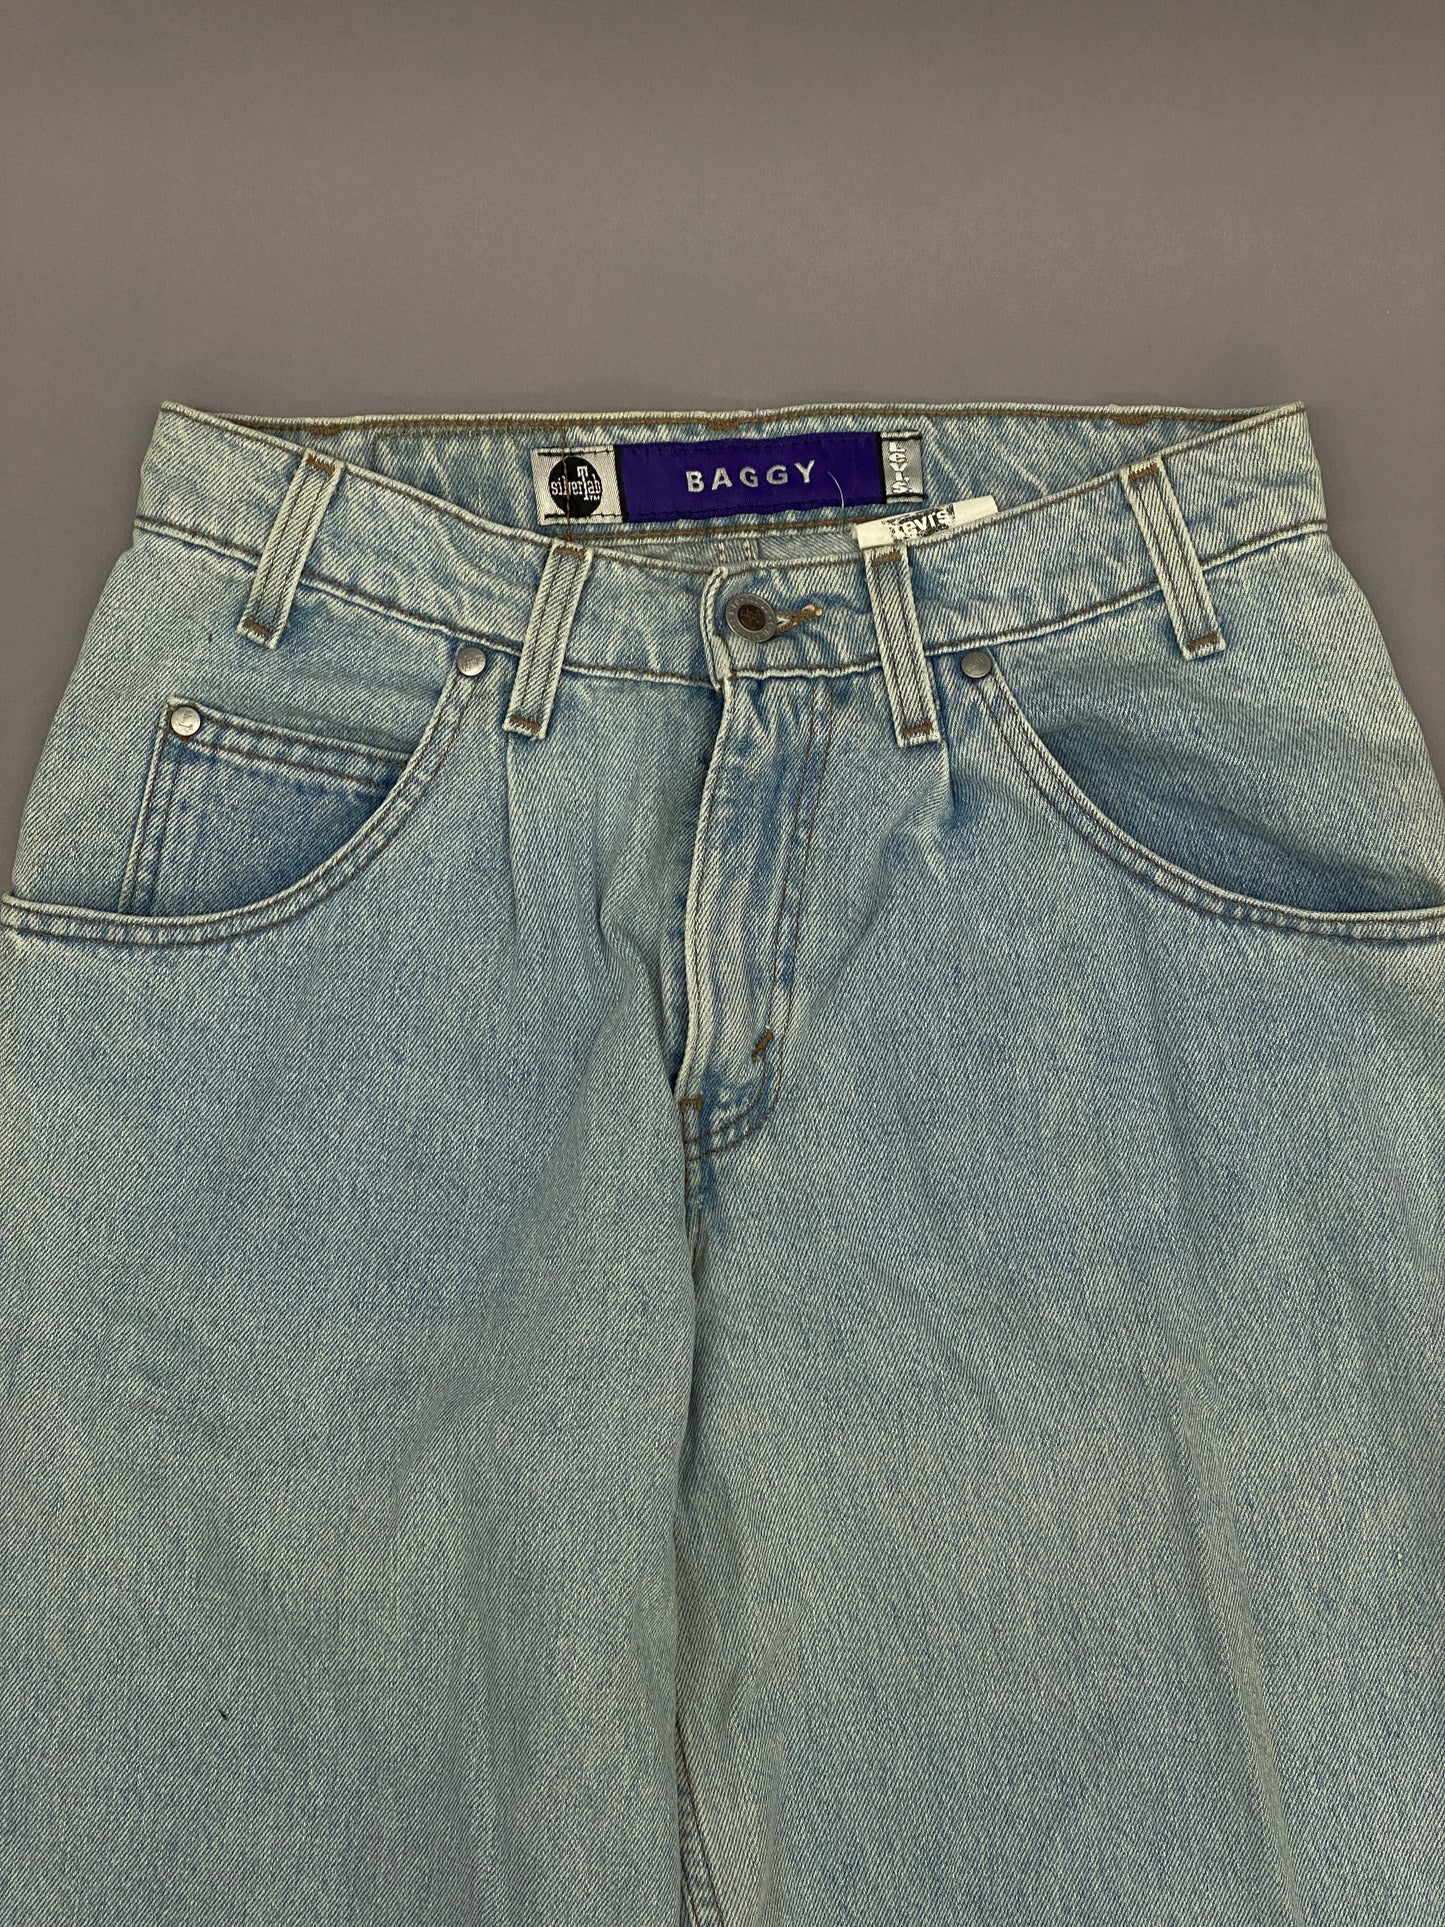 Levis Silvertab Vintage Baggy Jeans - 28 x 32